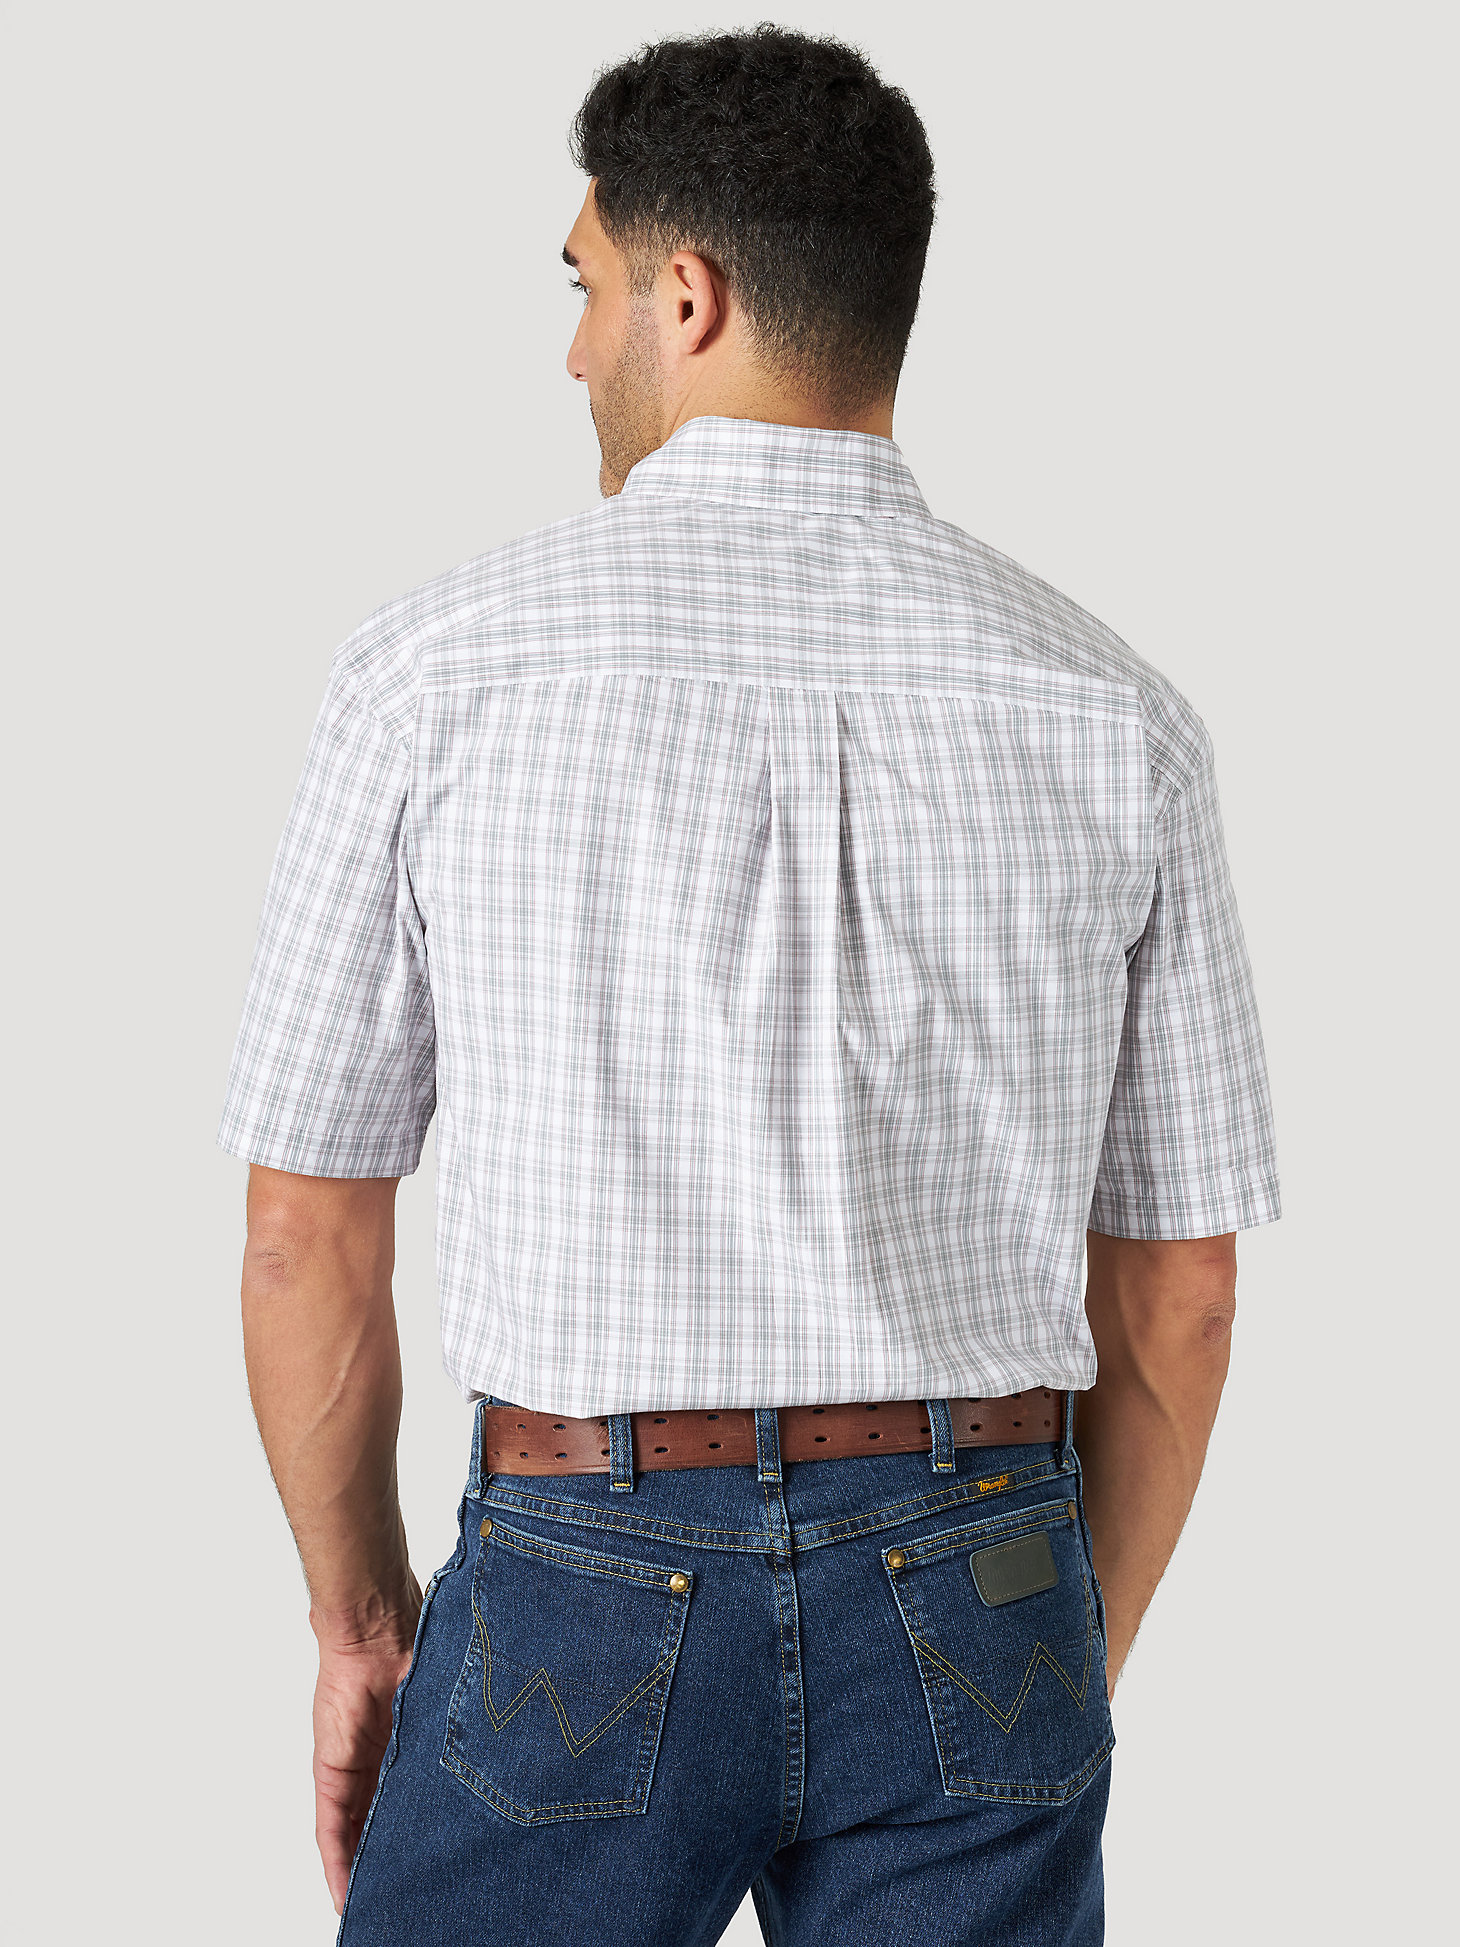 Men's George Strait Short Sleeve 1 Pocket Button Down Plaid Shirt in Rose Cloud alternative view 1